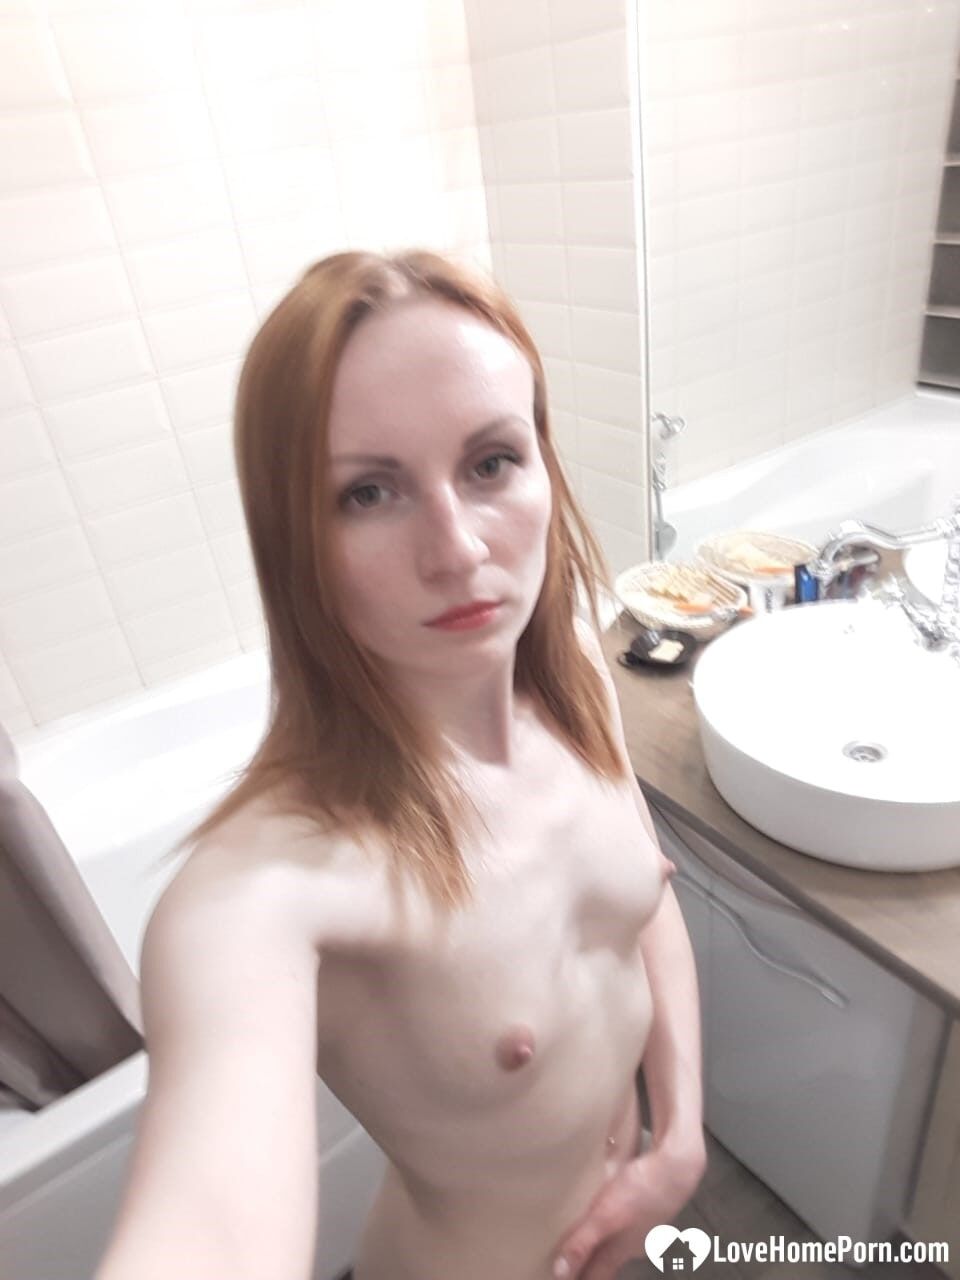 Skinny redhead girl posing in her bathroom naked #43